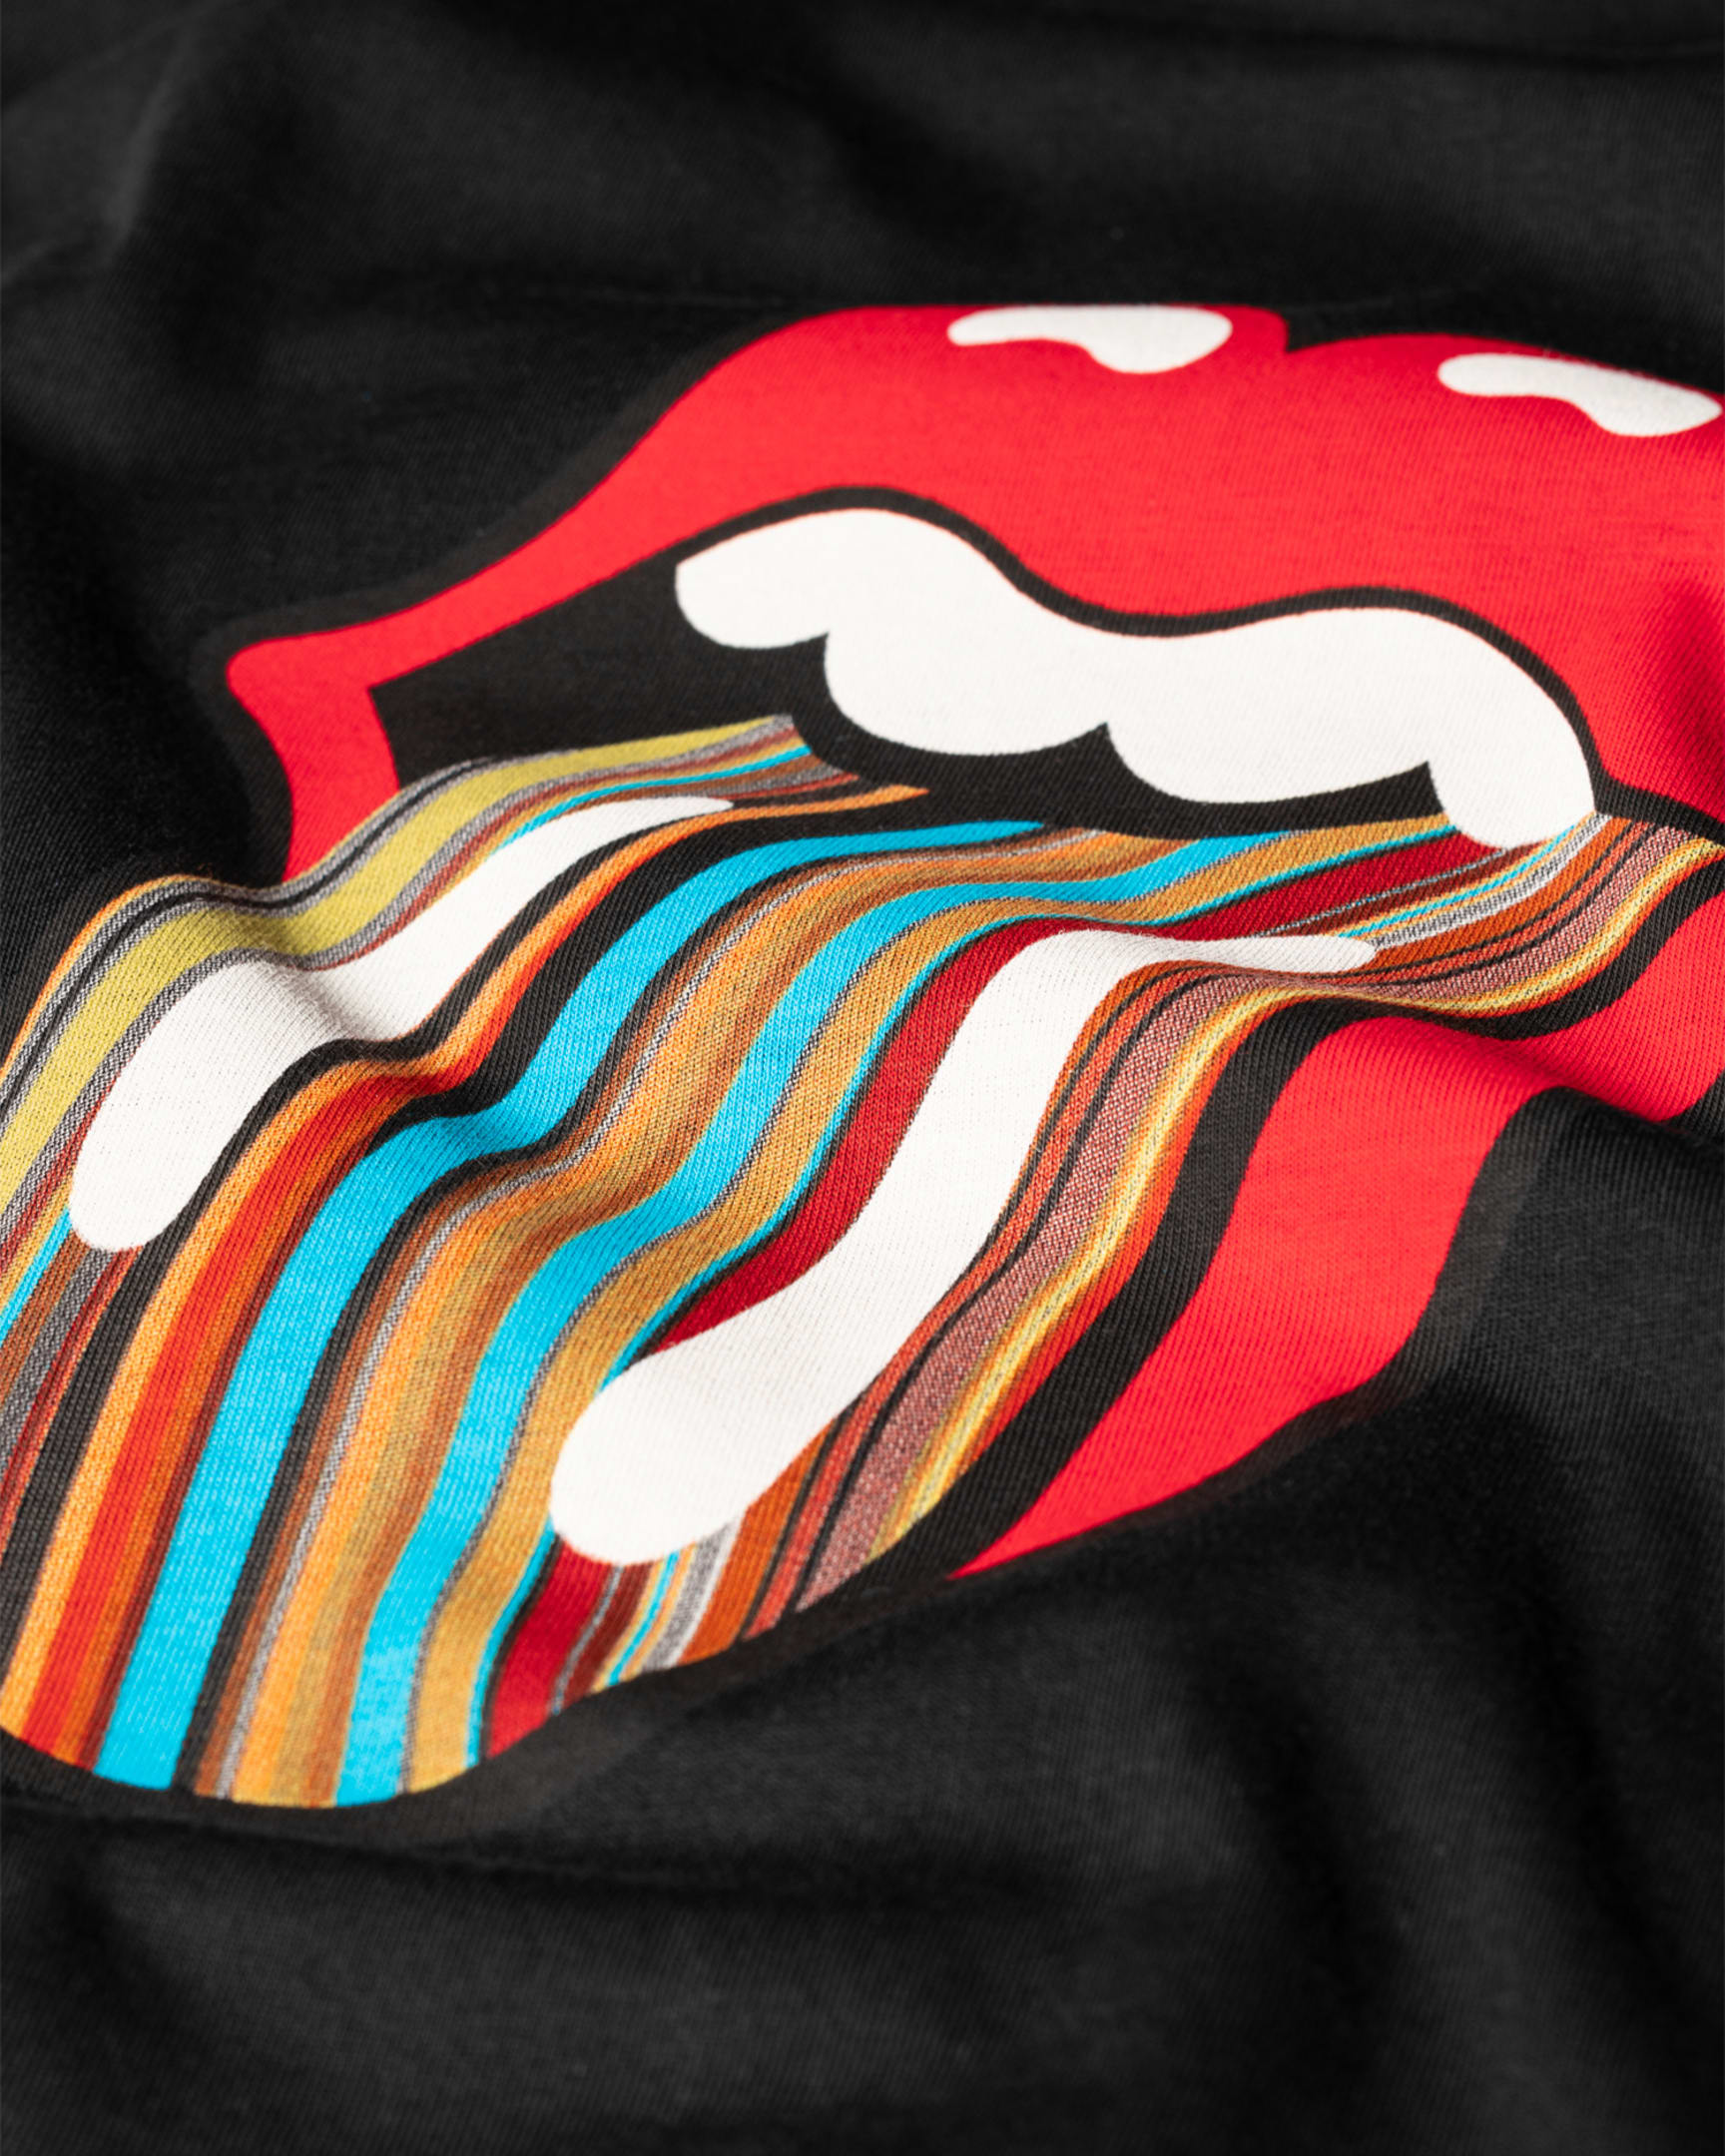 Detail View - The Rolling Stones x Paul Smith - Black 'Signature Stripe' Tongue Logo T-Shirt Paul Smith